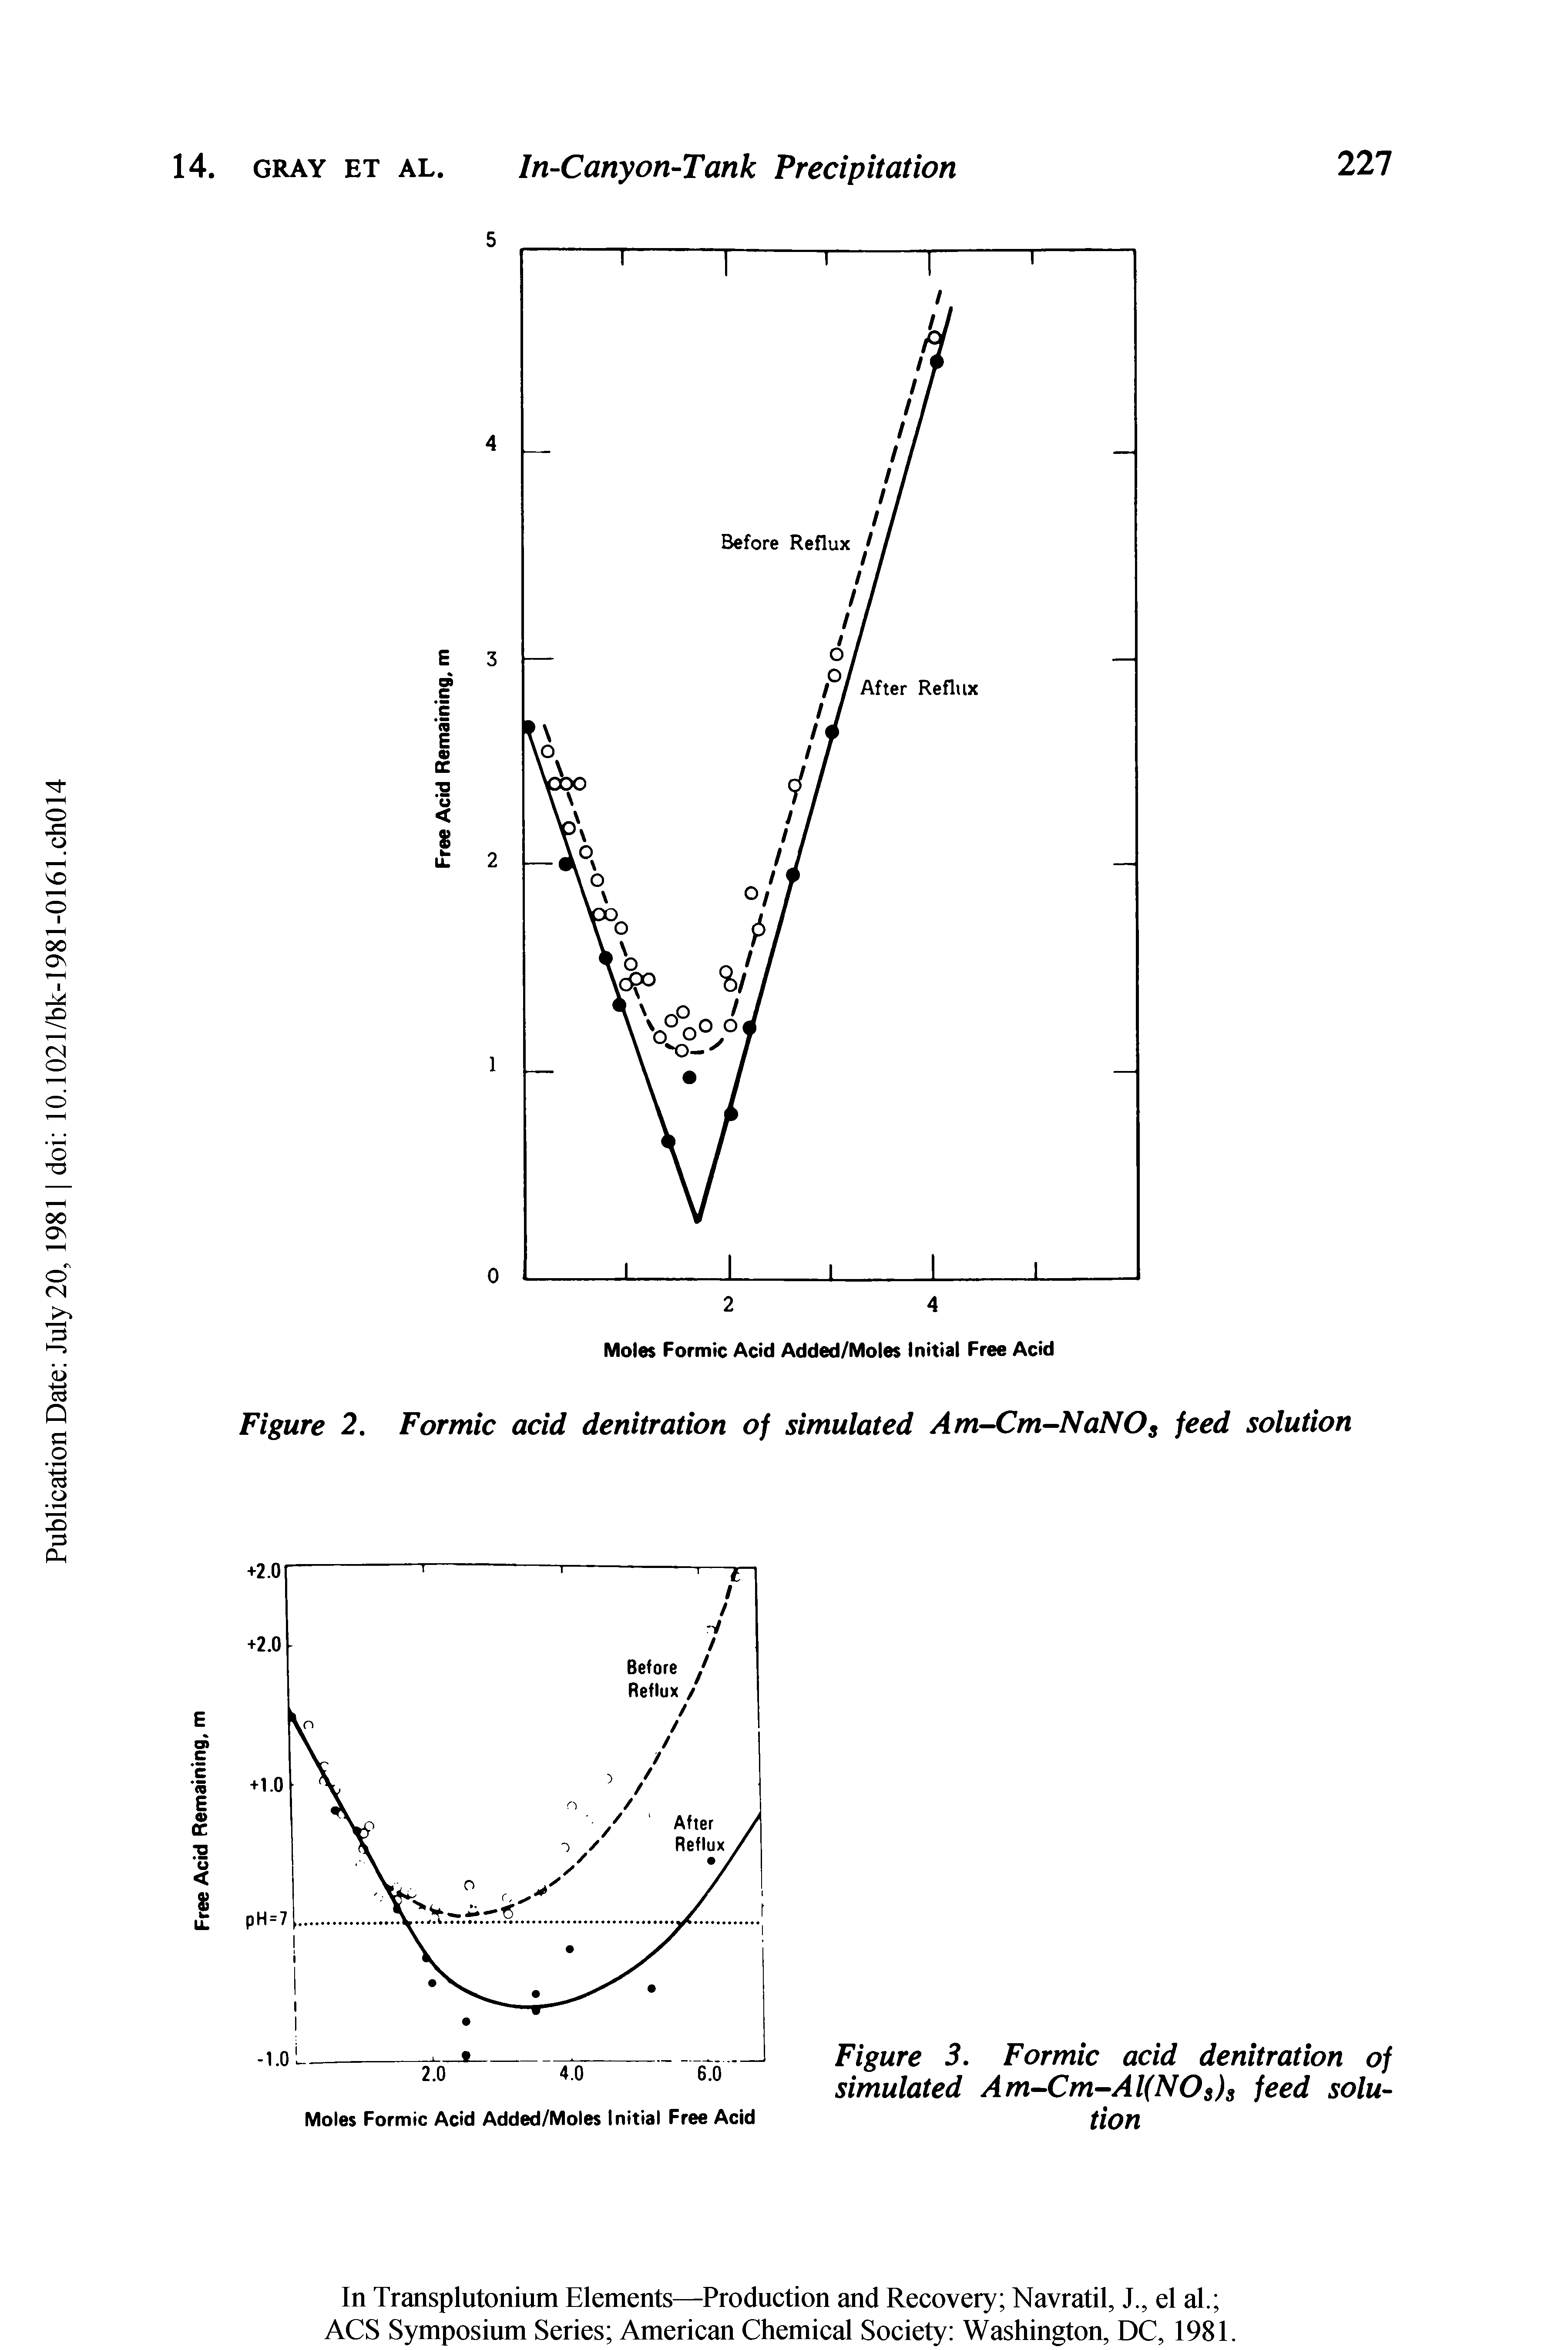 Figure 2. Formic acid denitration of simulated Am-Cm-NaNOs feed solution...